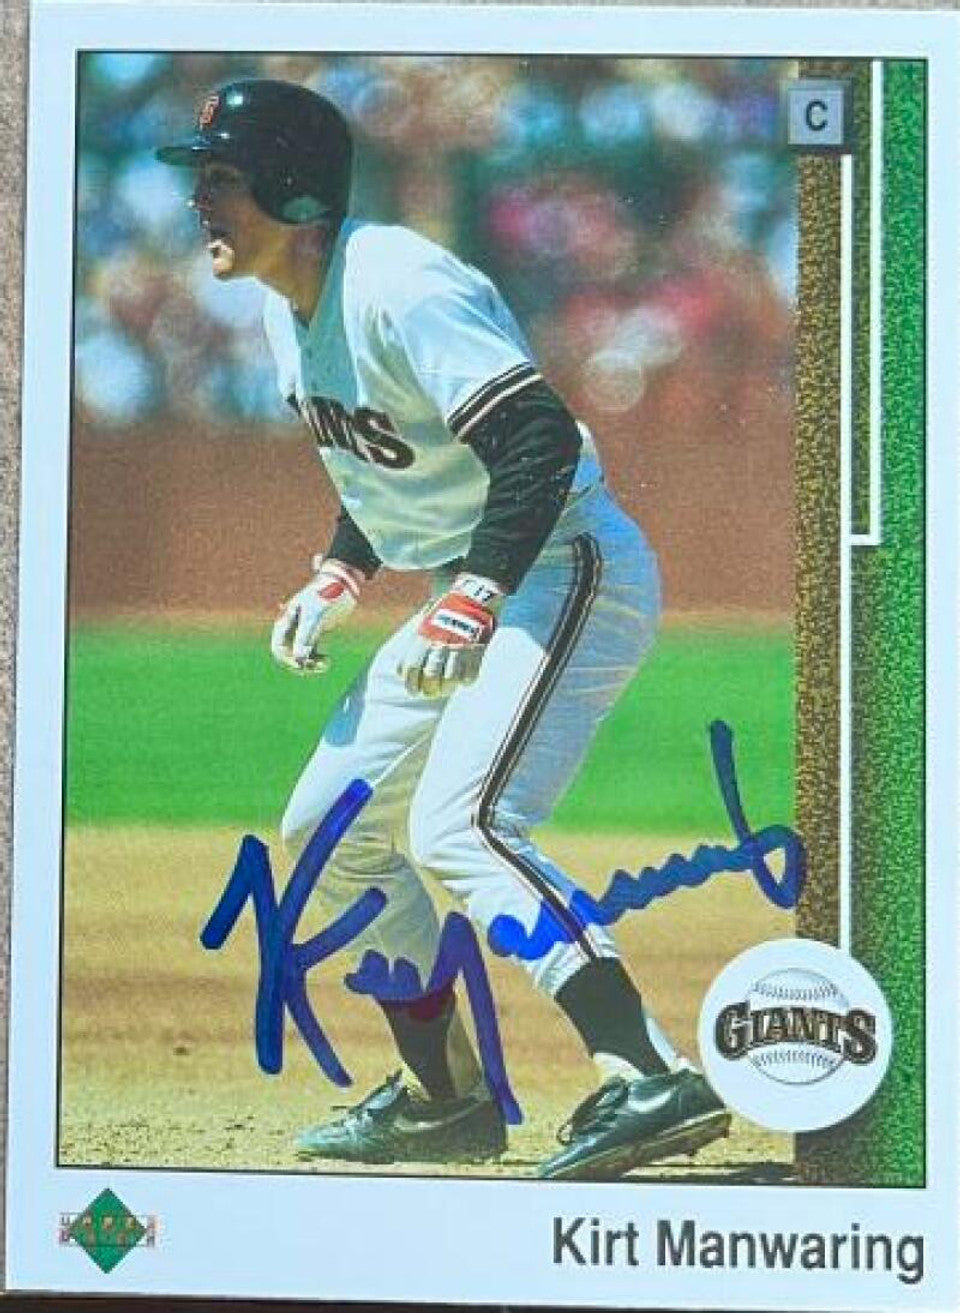 Kirt Manwaring Signed 1989 Upper Deck Baseball Card - San Francisco Giants